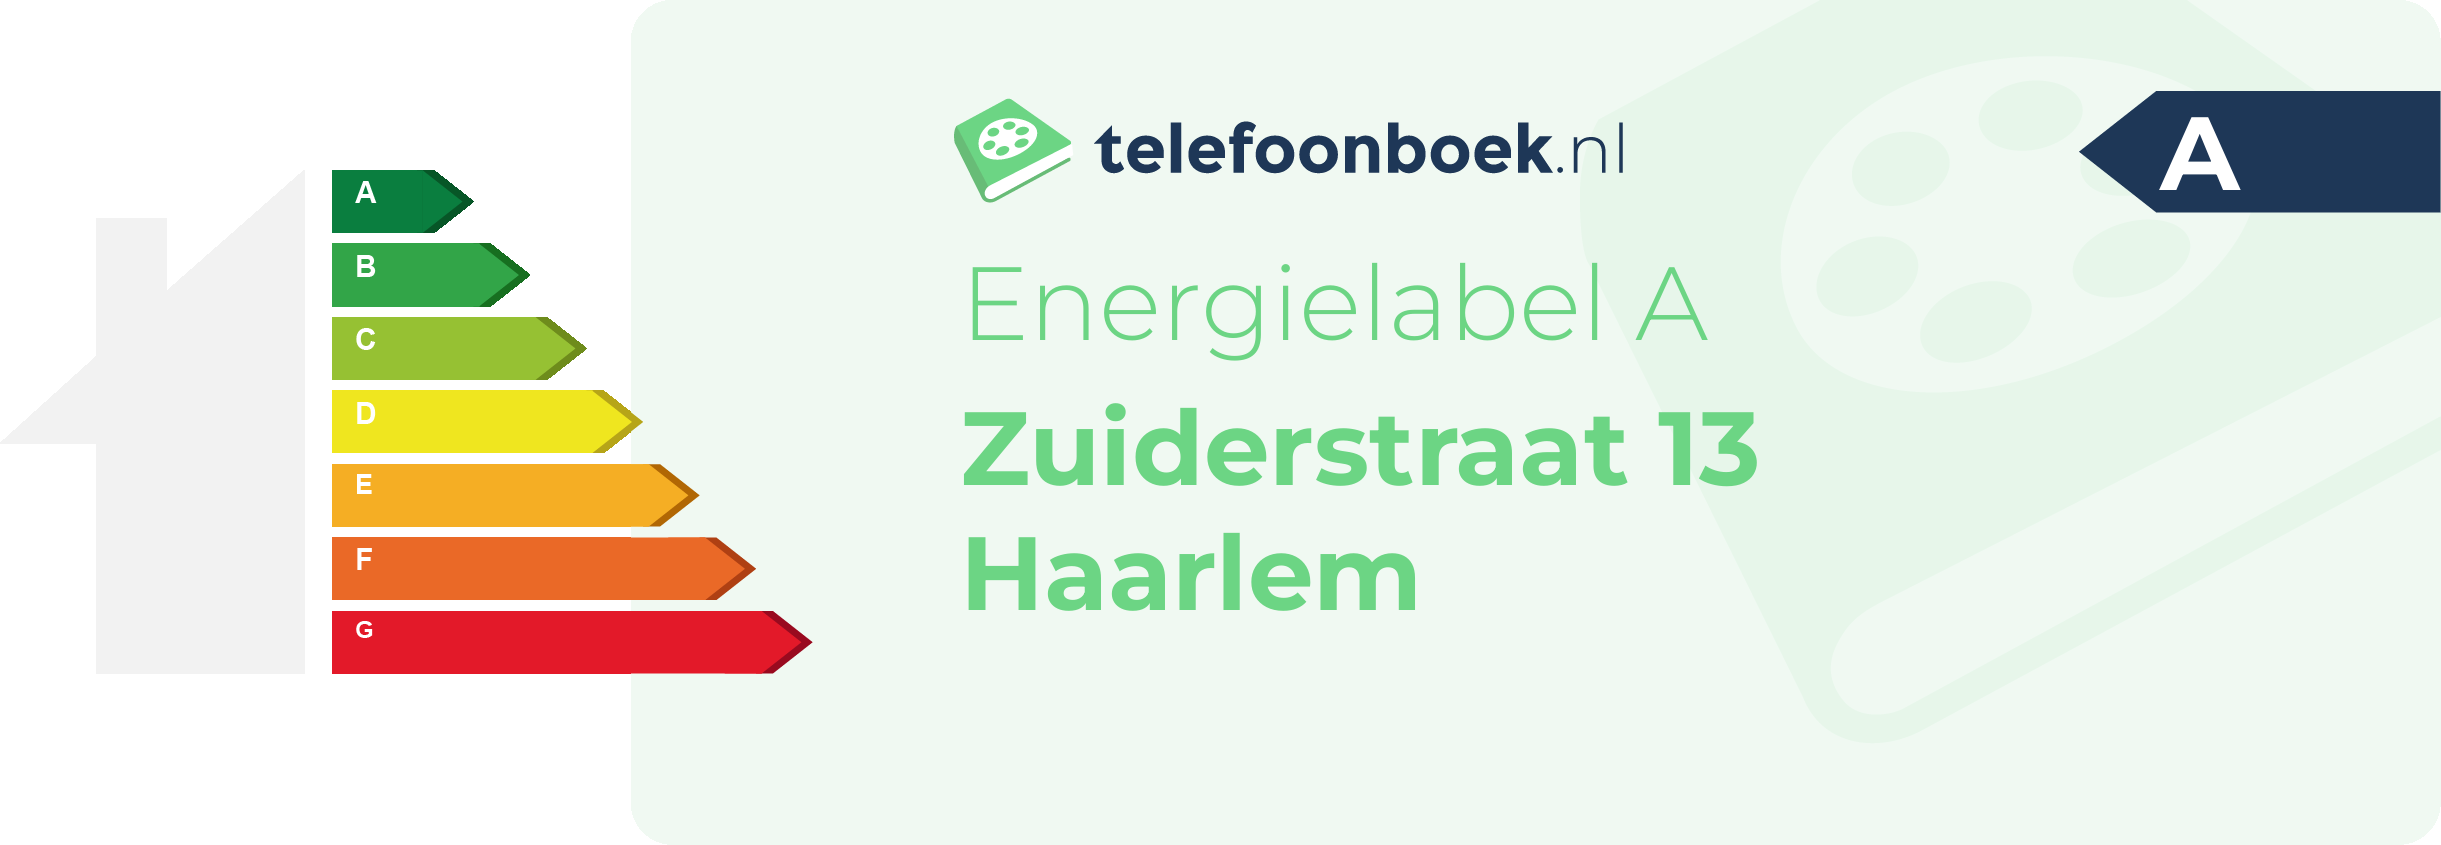 Energielabel Zuiderstraat 13 Haarlem